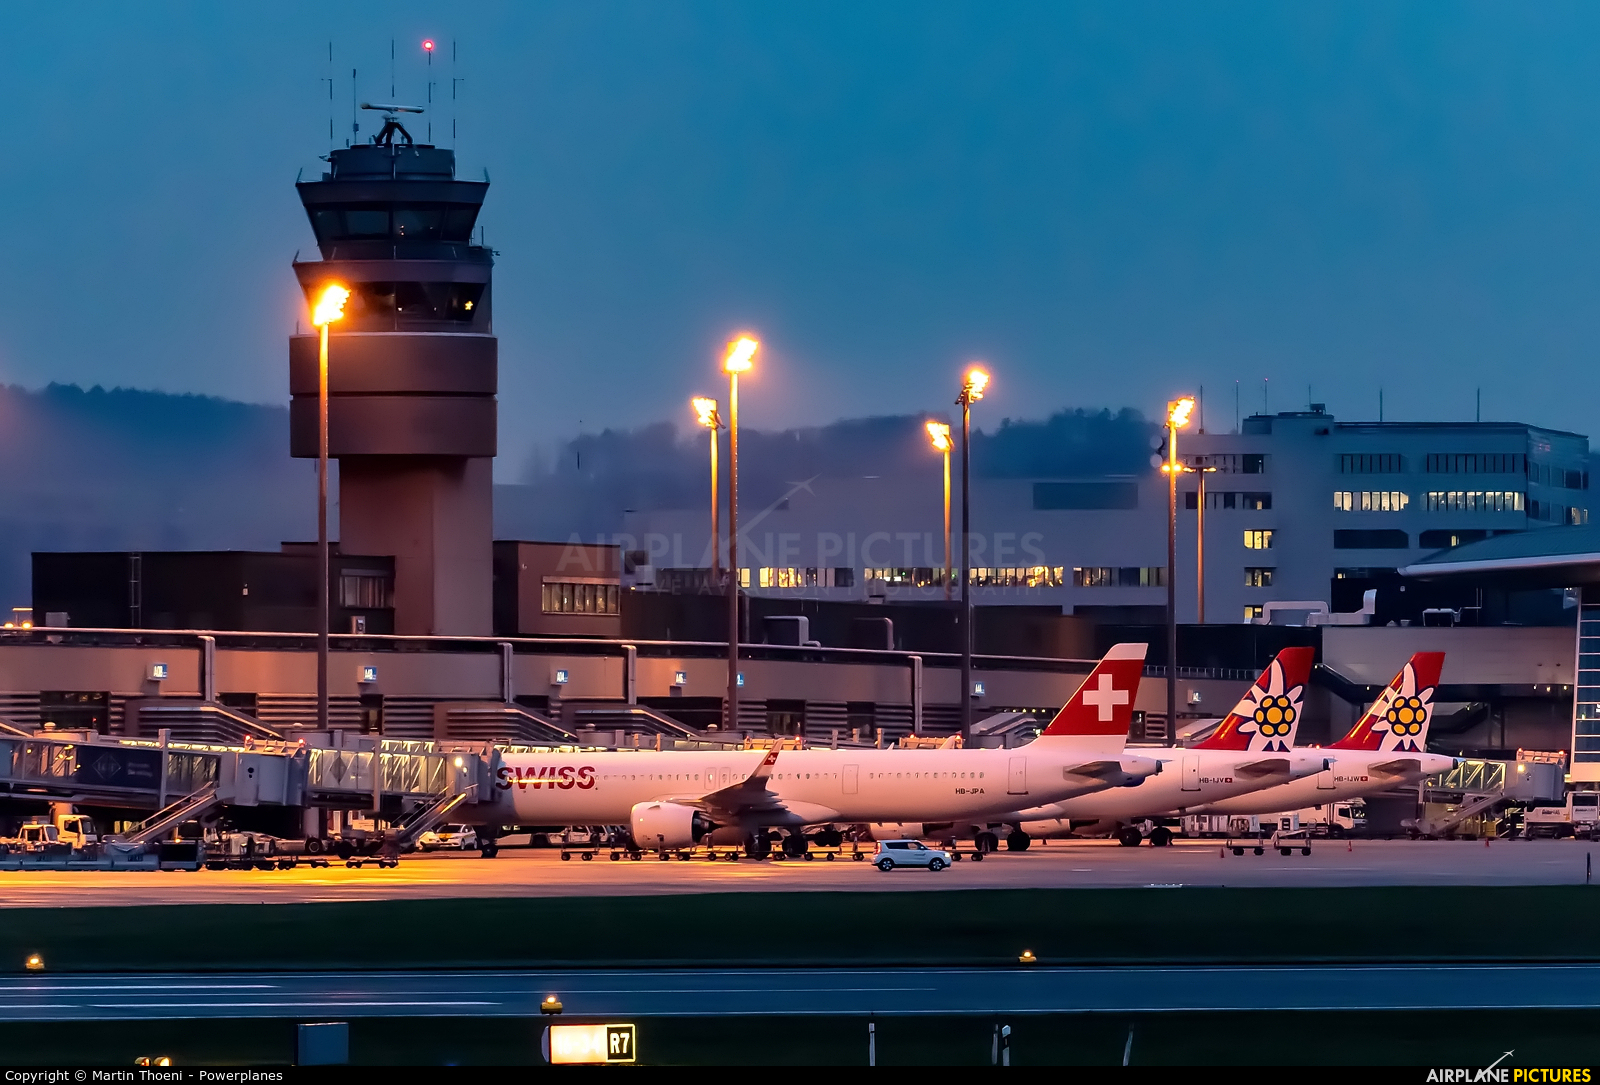 - Airport Overview - aircraft at Zurich